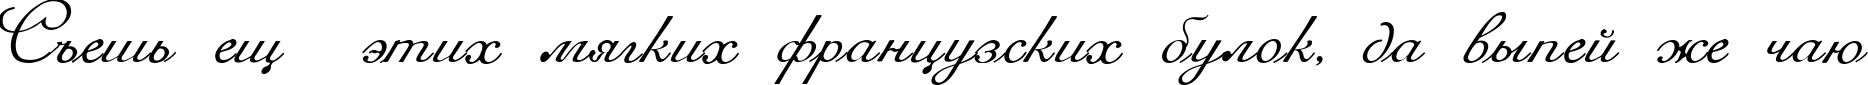 Пример написания шрифтом Romana Script текста на русском